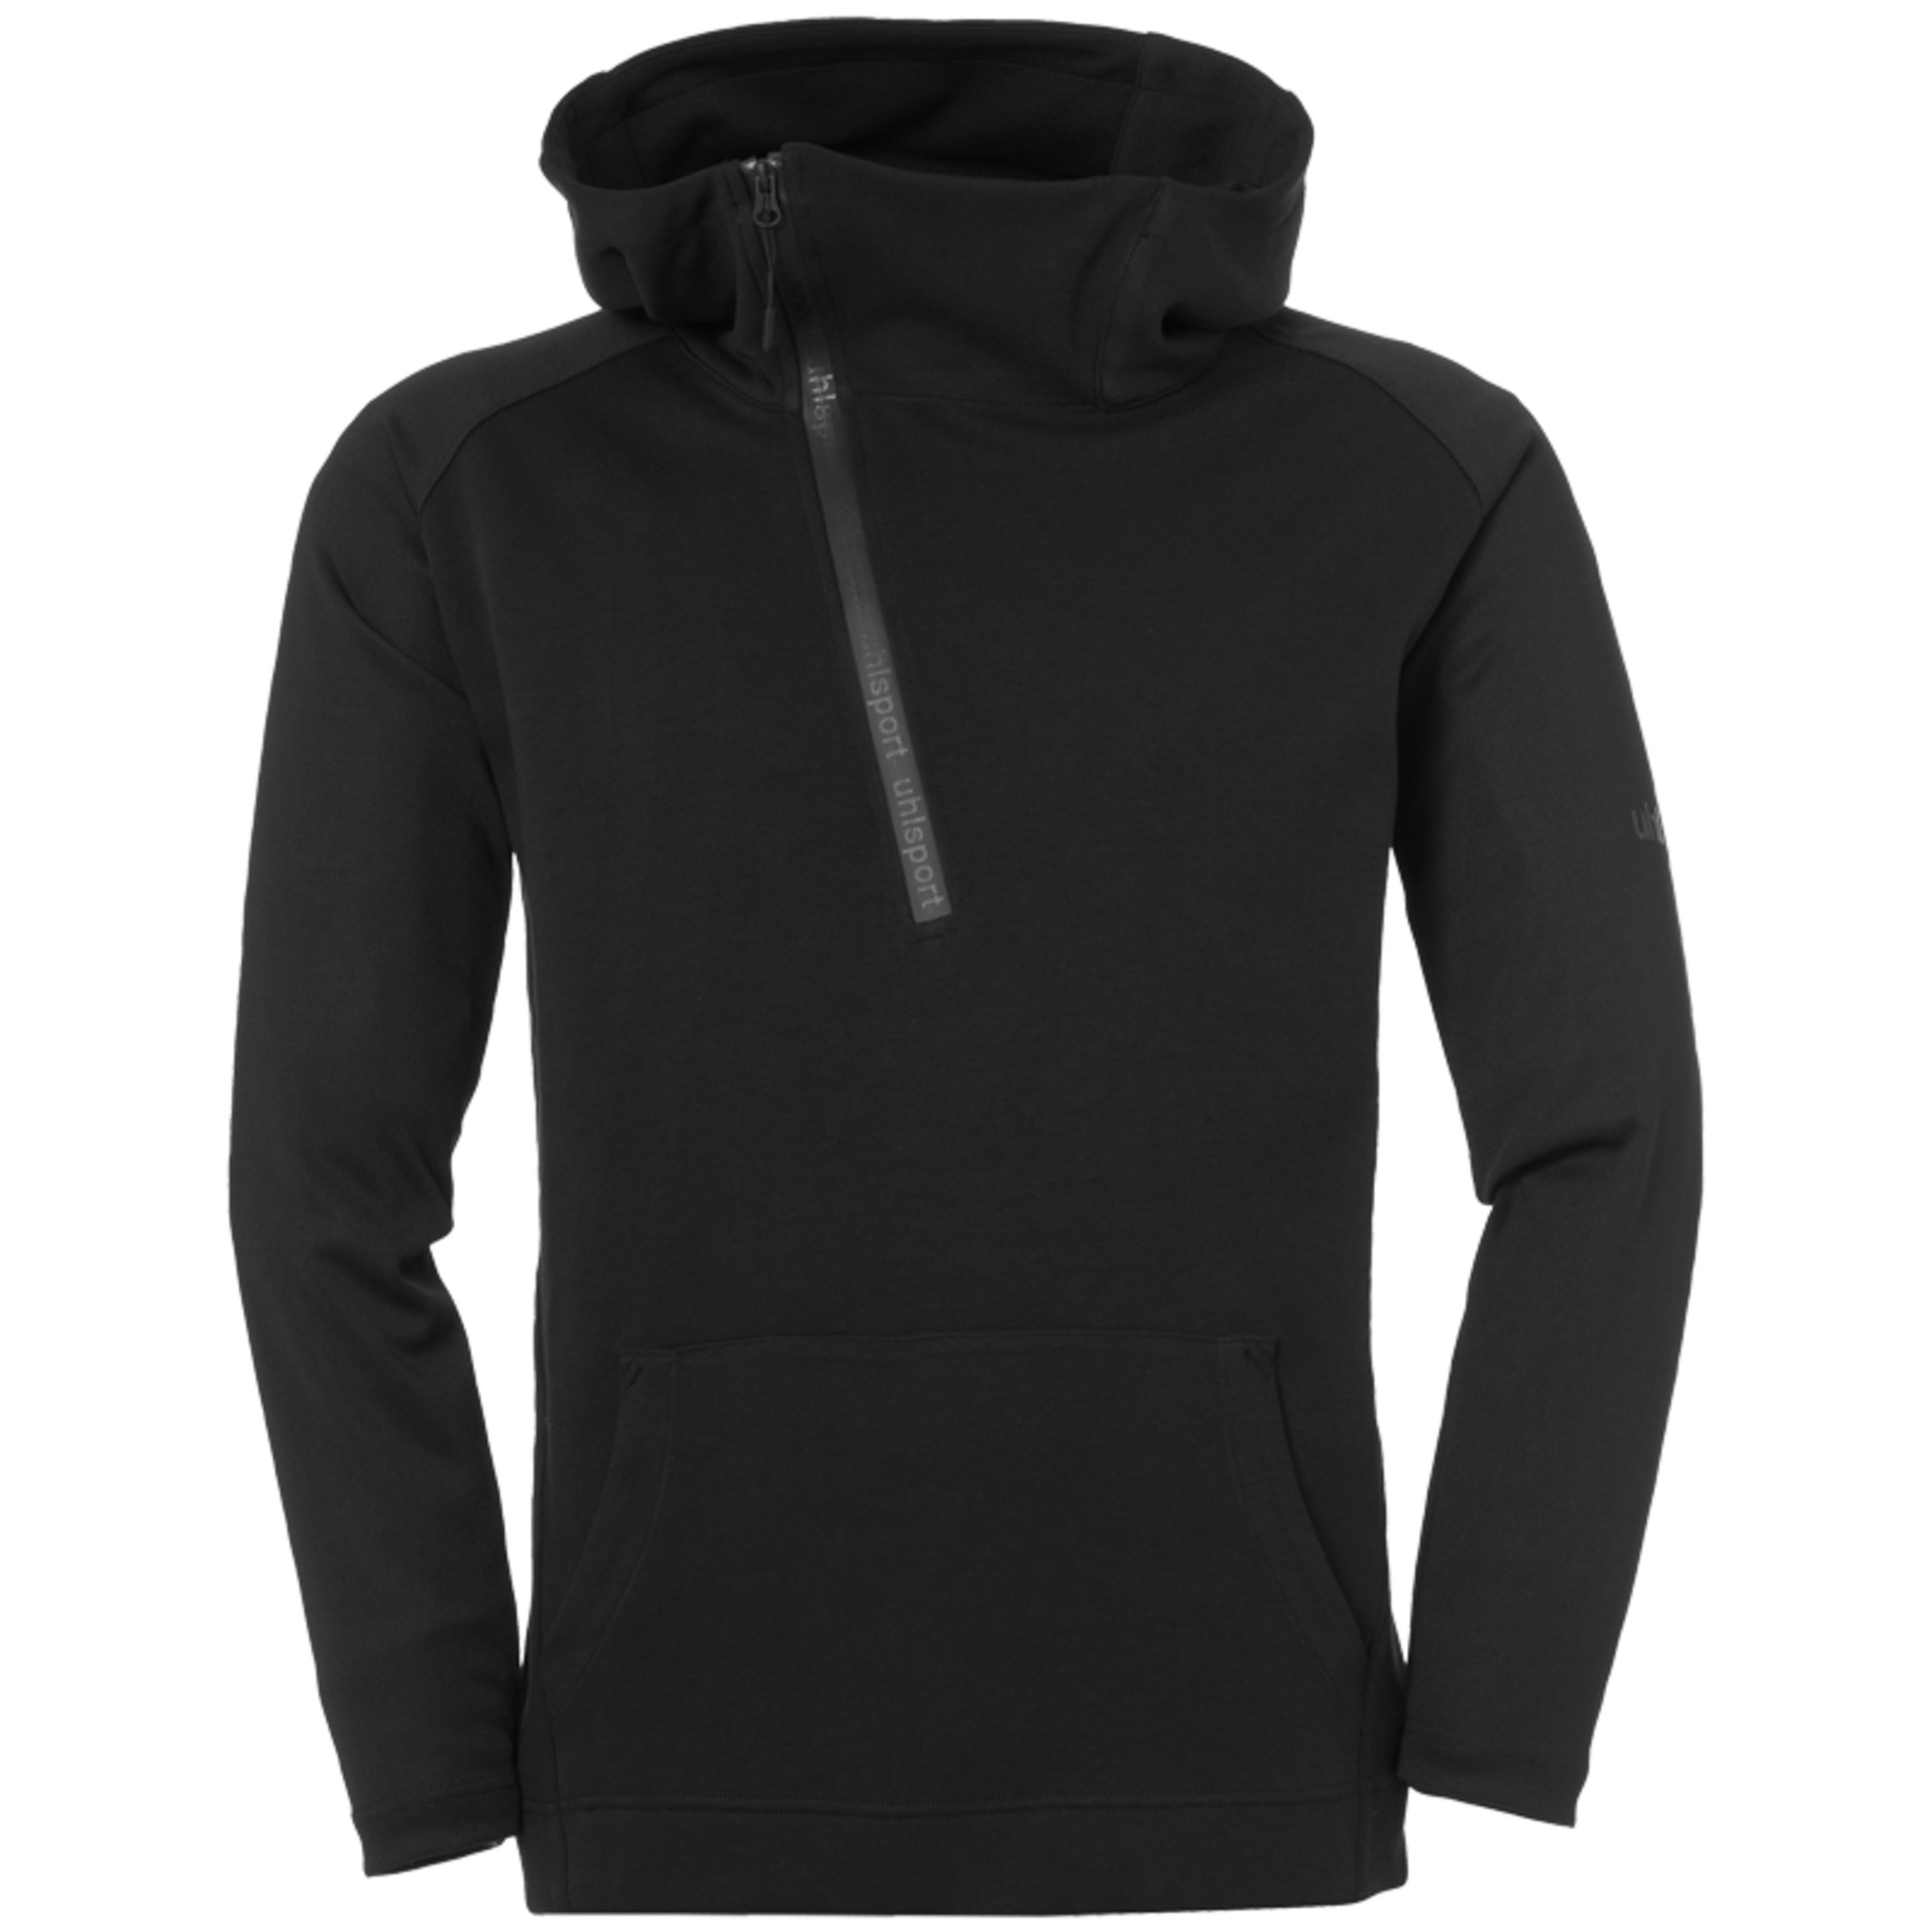 Essential Pro Zip-hoodie Black Uhlsport